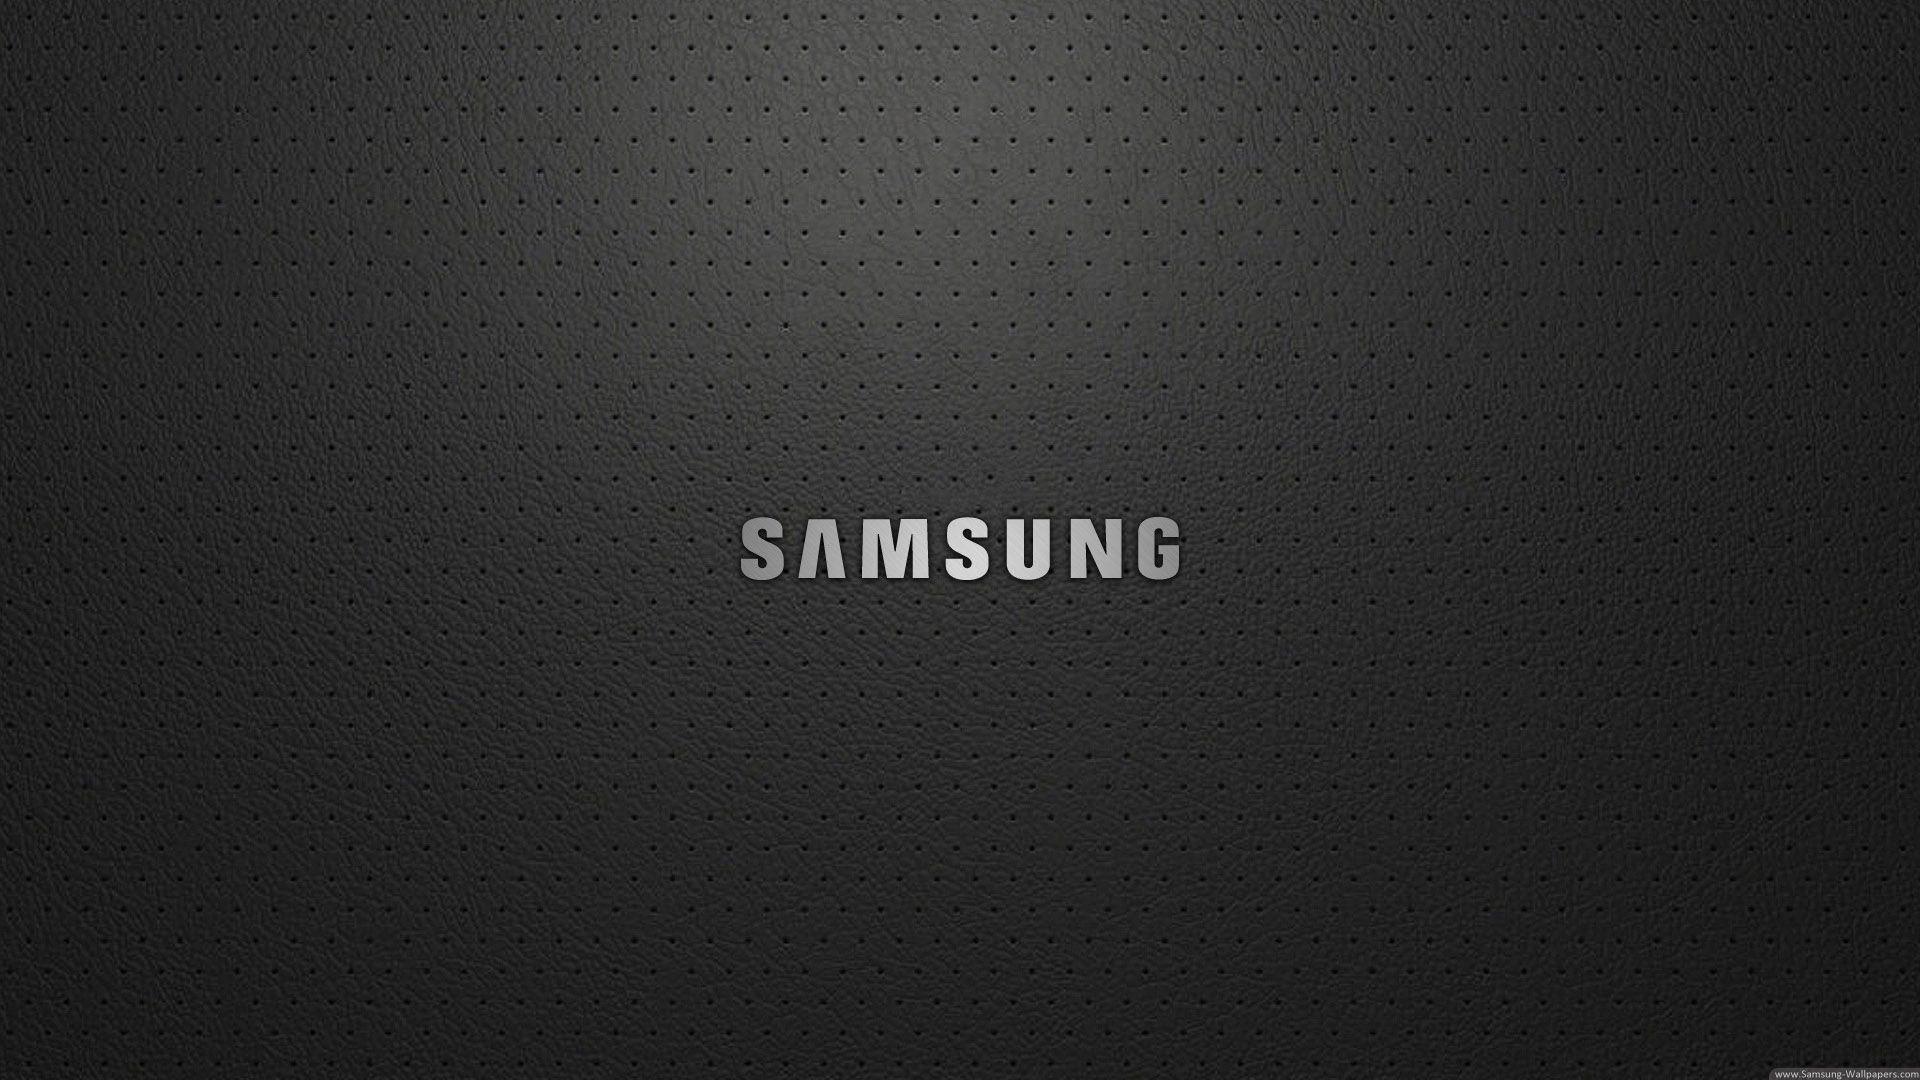 Samsung Logo Deskx1080 Galaxy S4 Wallpaper HD_Samsung